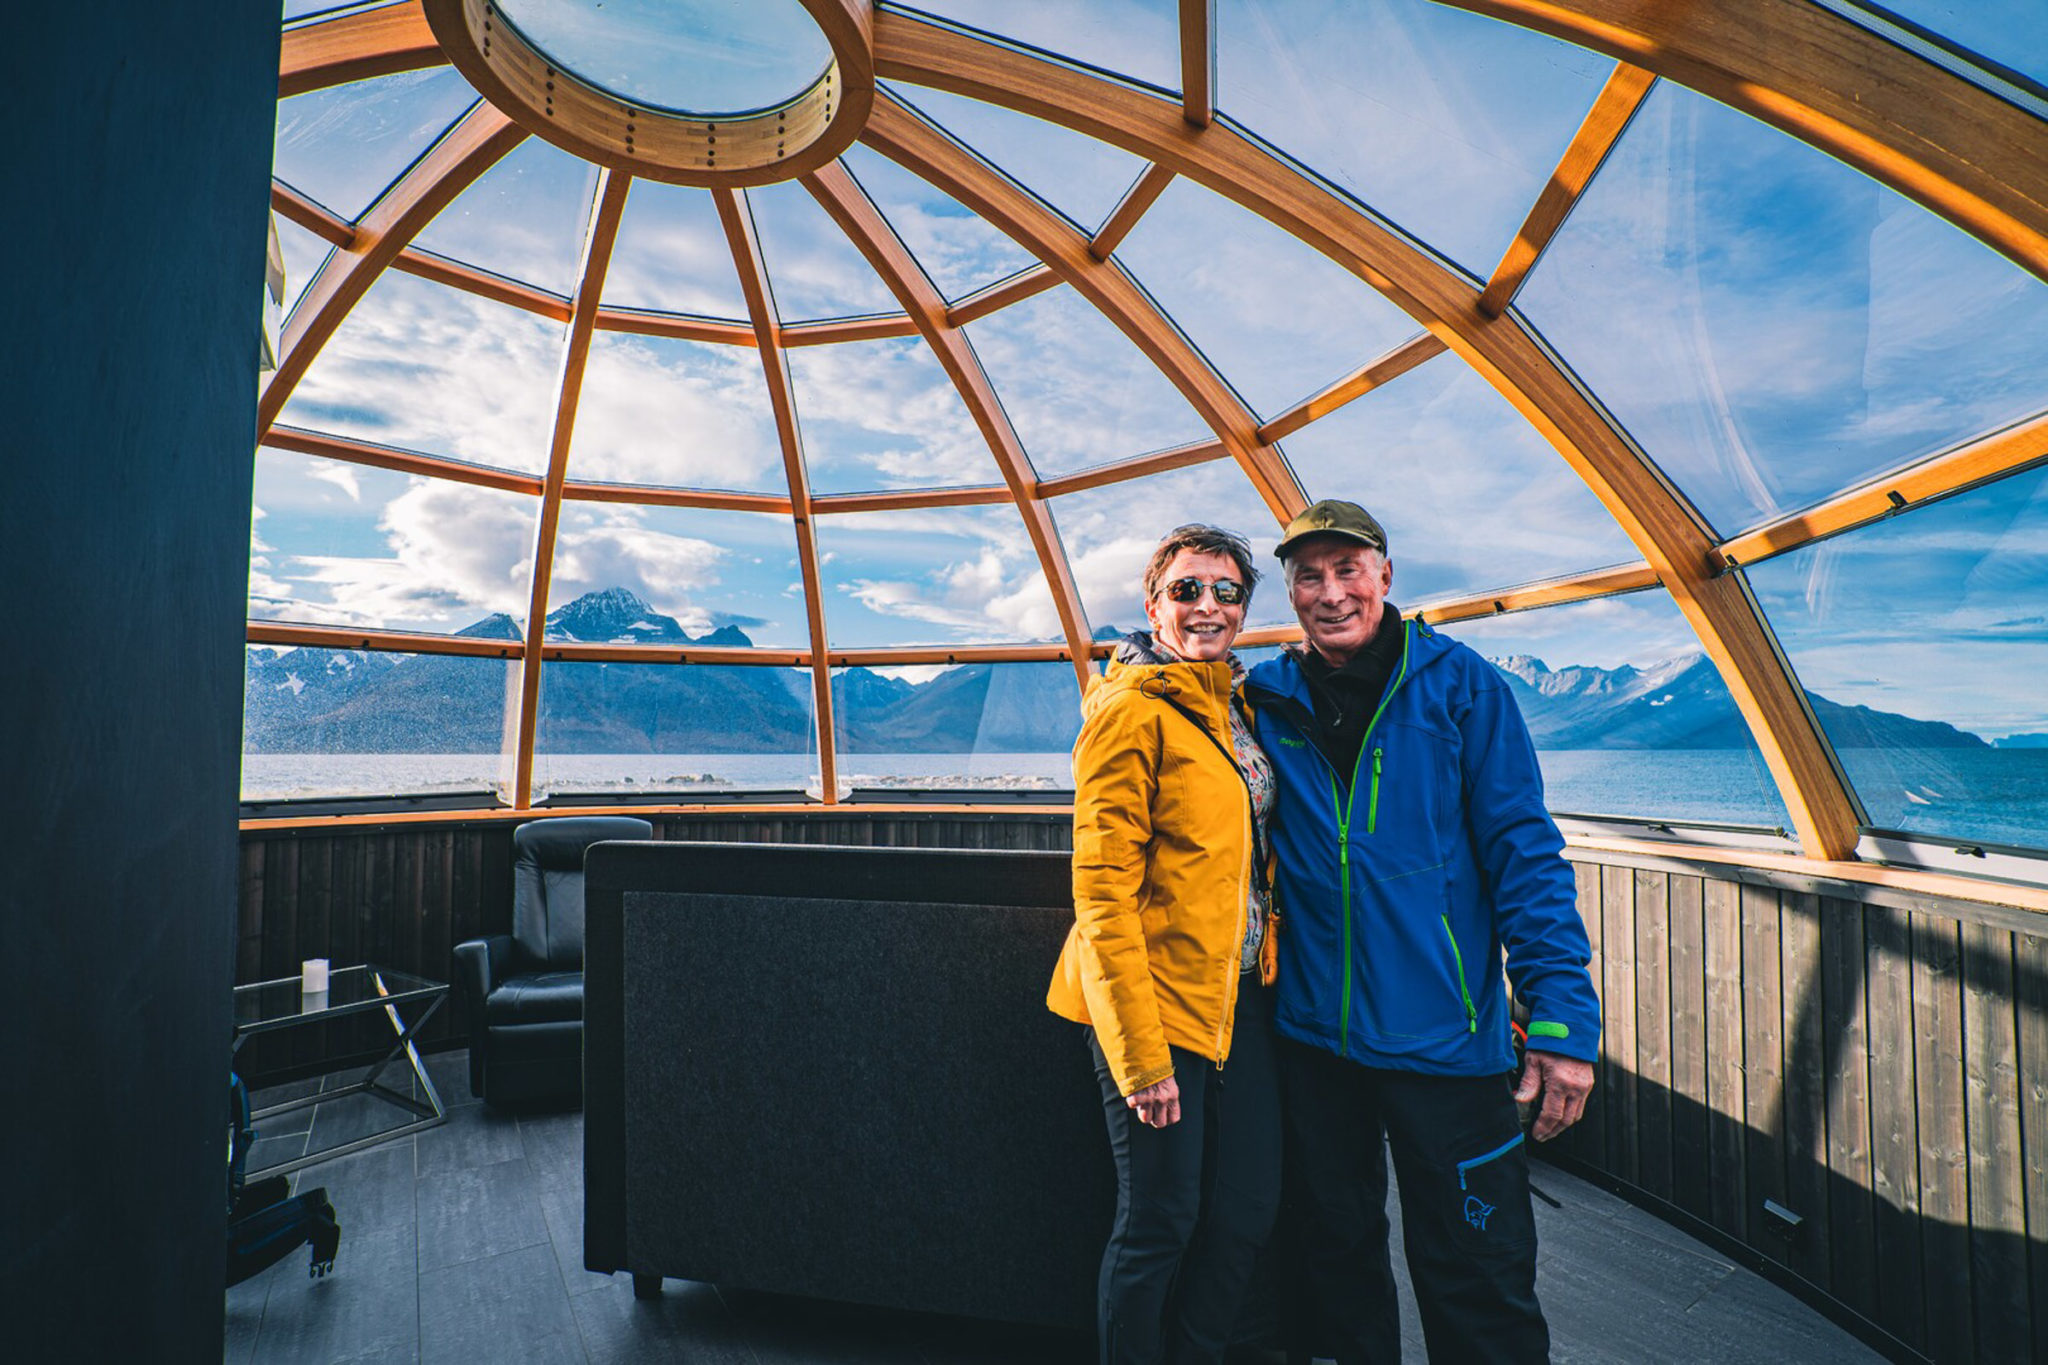 Staying in a glass igloo at Spåkenes © Petr Pavlíček / Visit Lyngenfjord